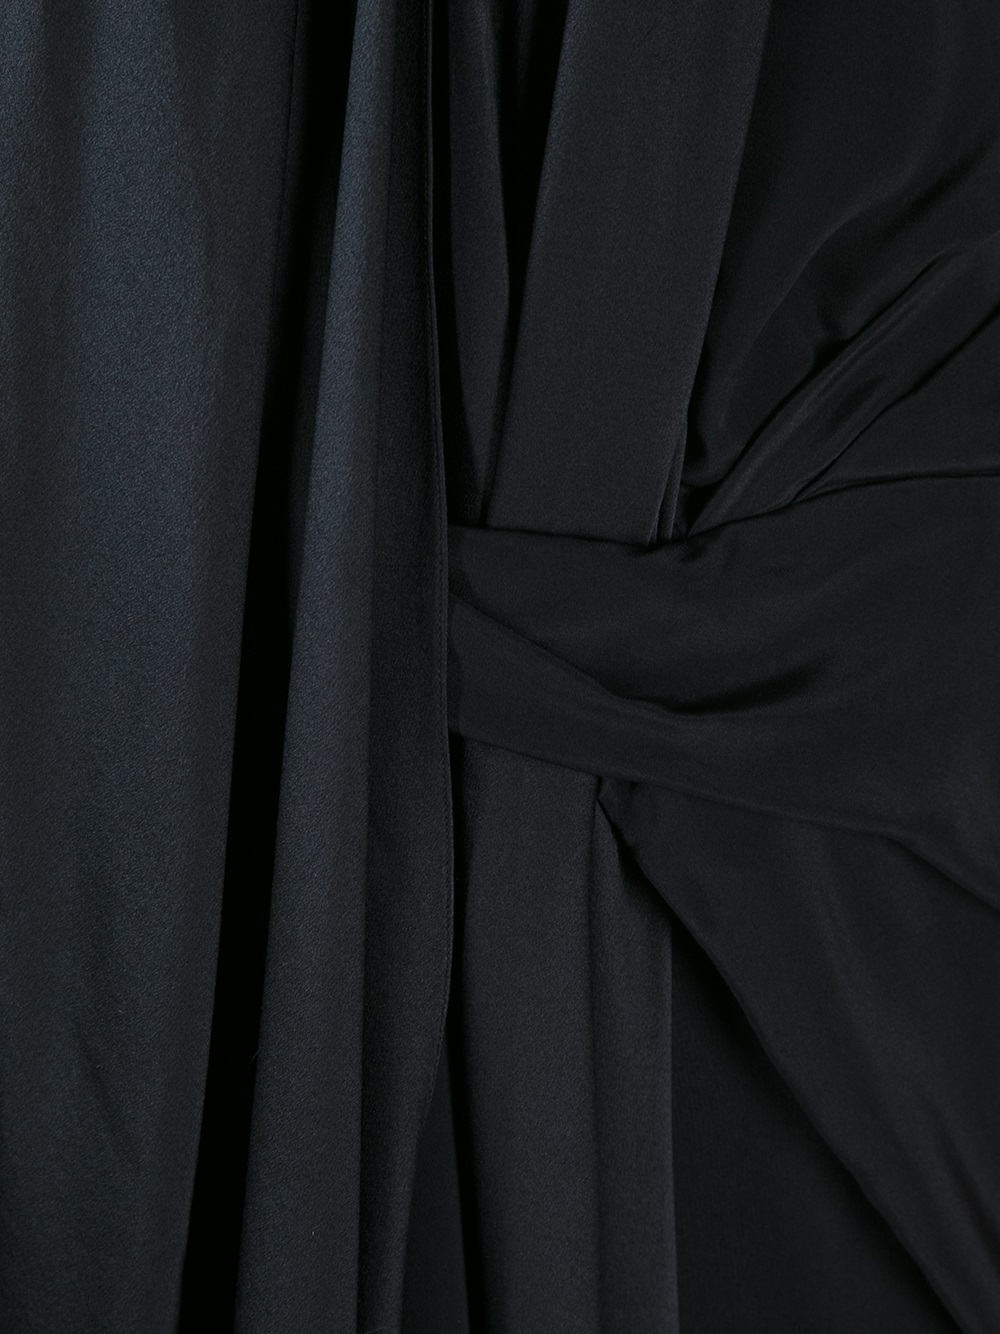 Lyst - Alexander Wang Draped Dress in Black